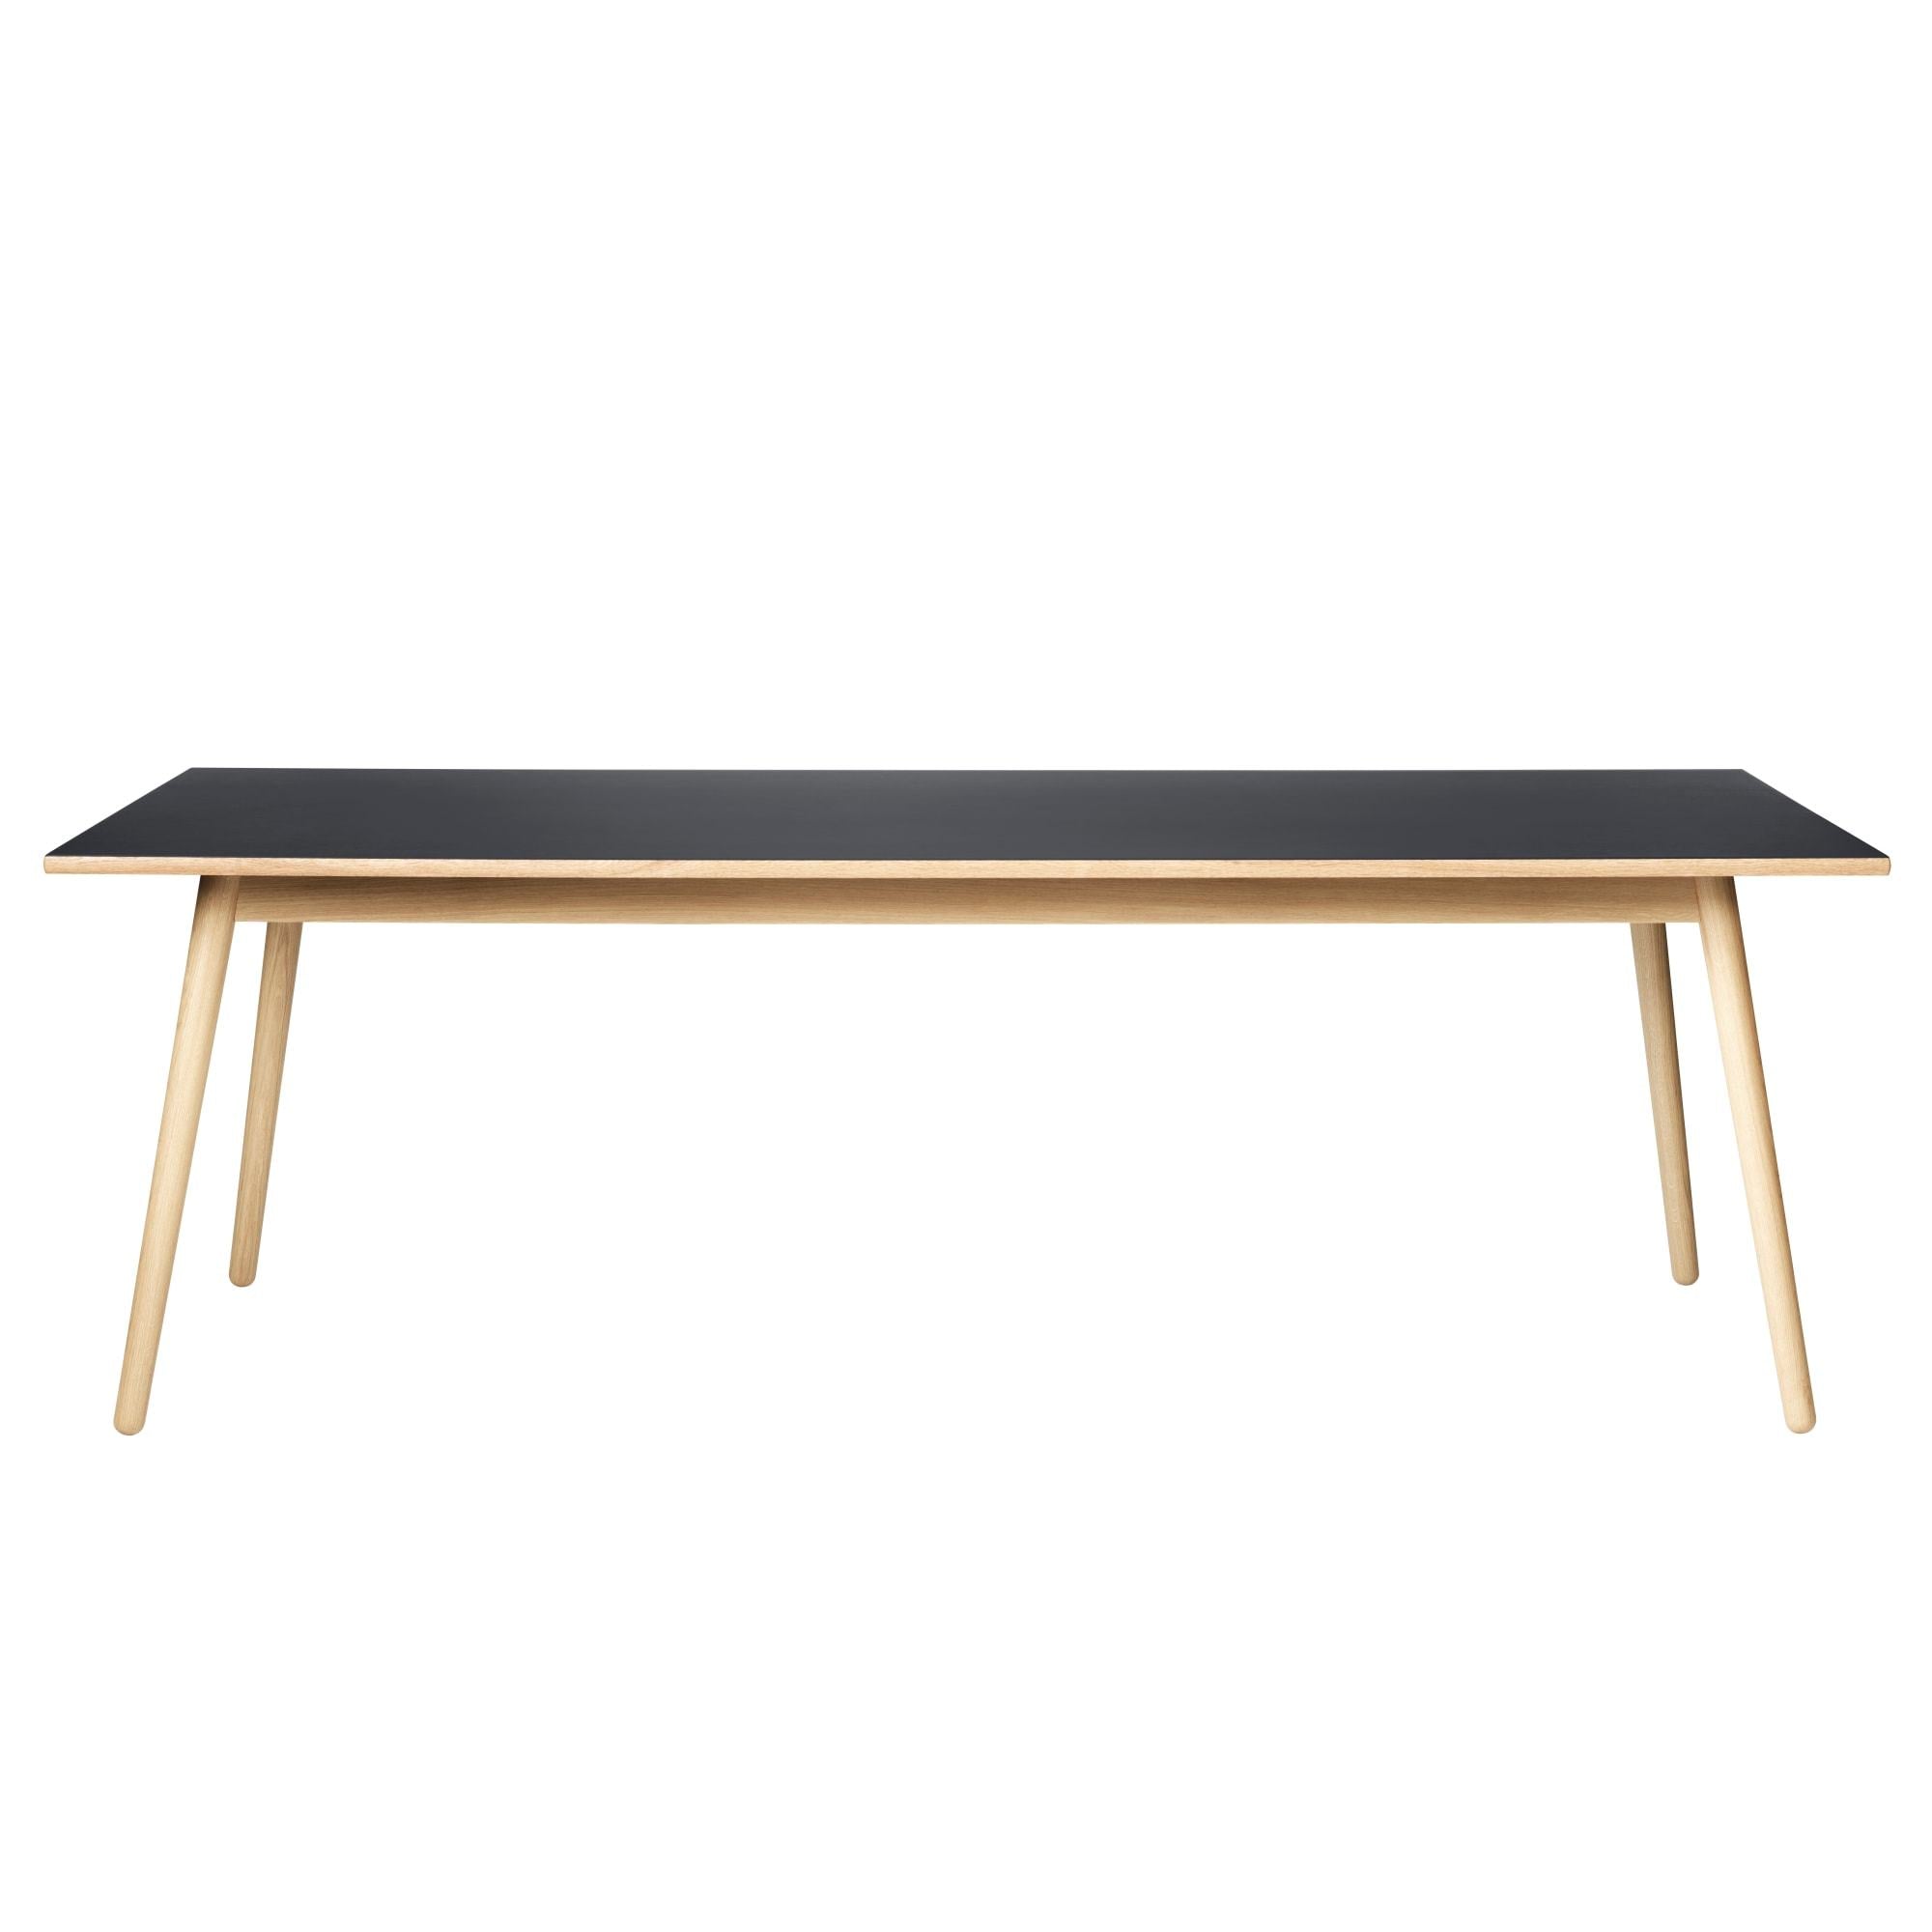 FDB Møbler C35 B Spisebordets eg, mørkegrå linoleum, 95x220cm